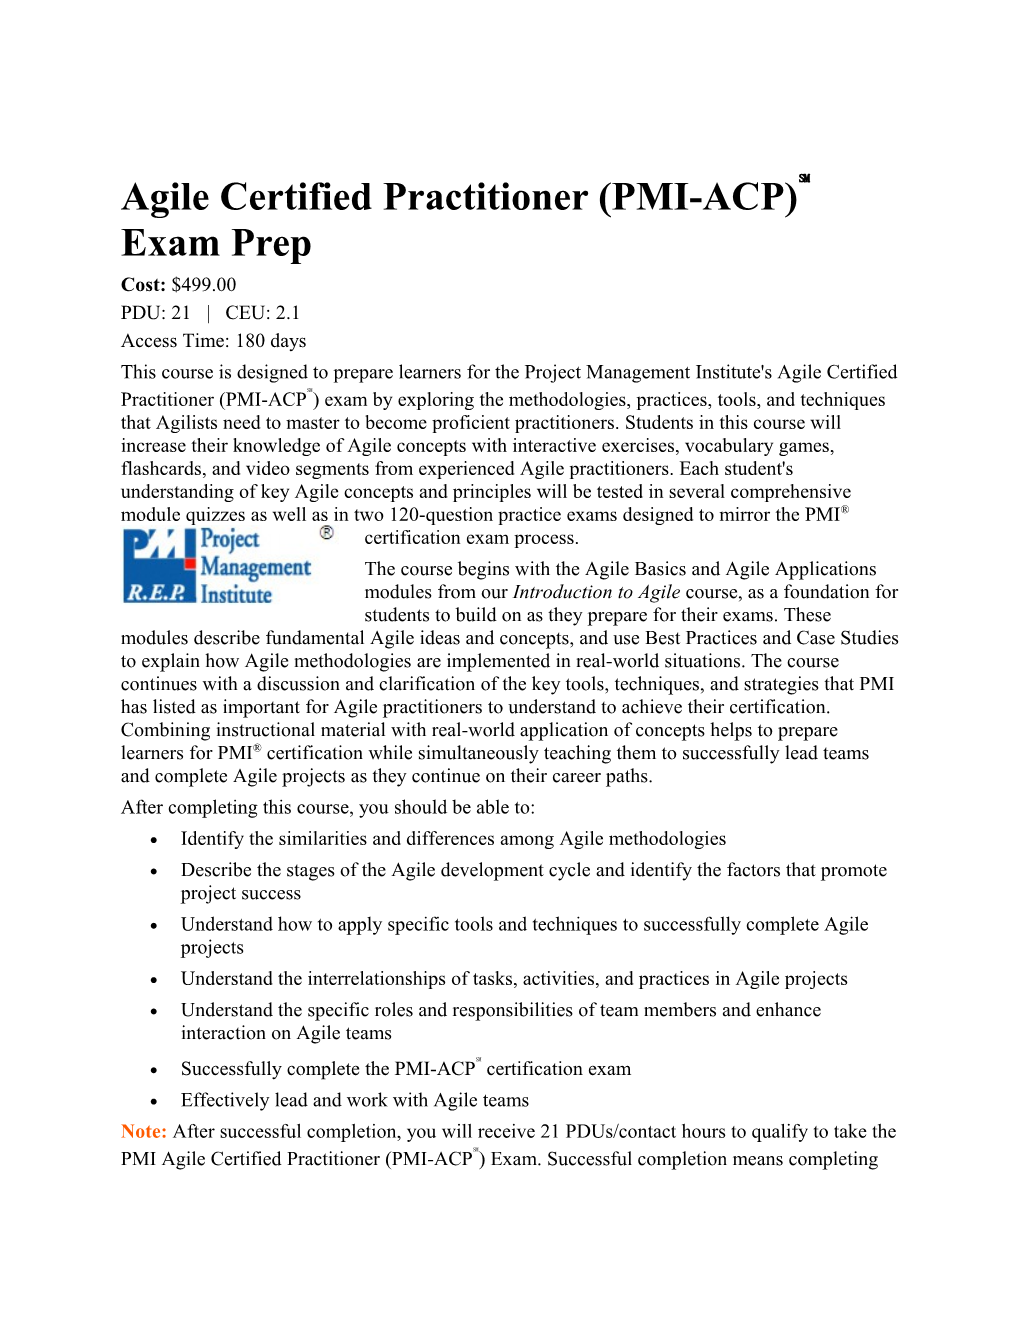 Agile Certified Practitioner (PMI-ACP) Exam Prep